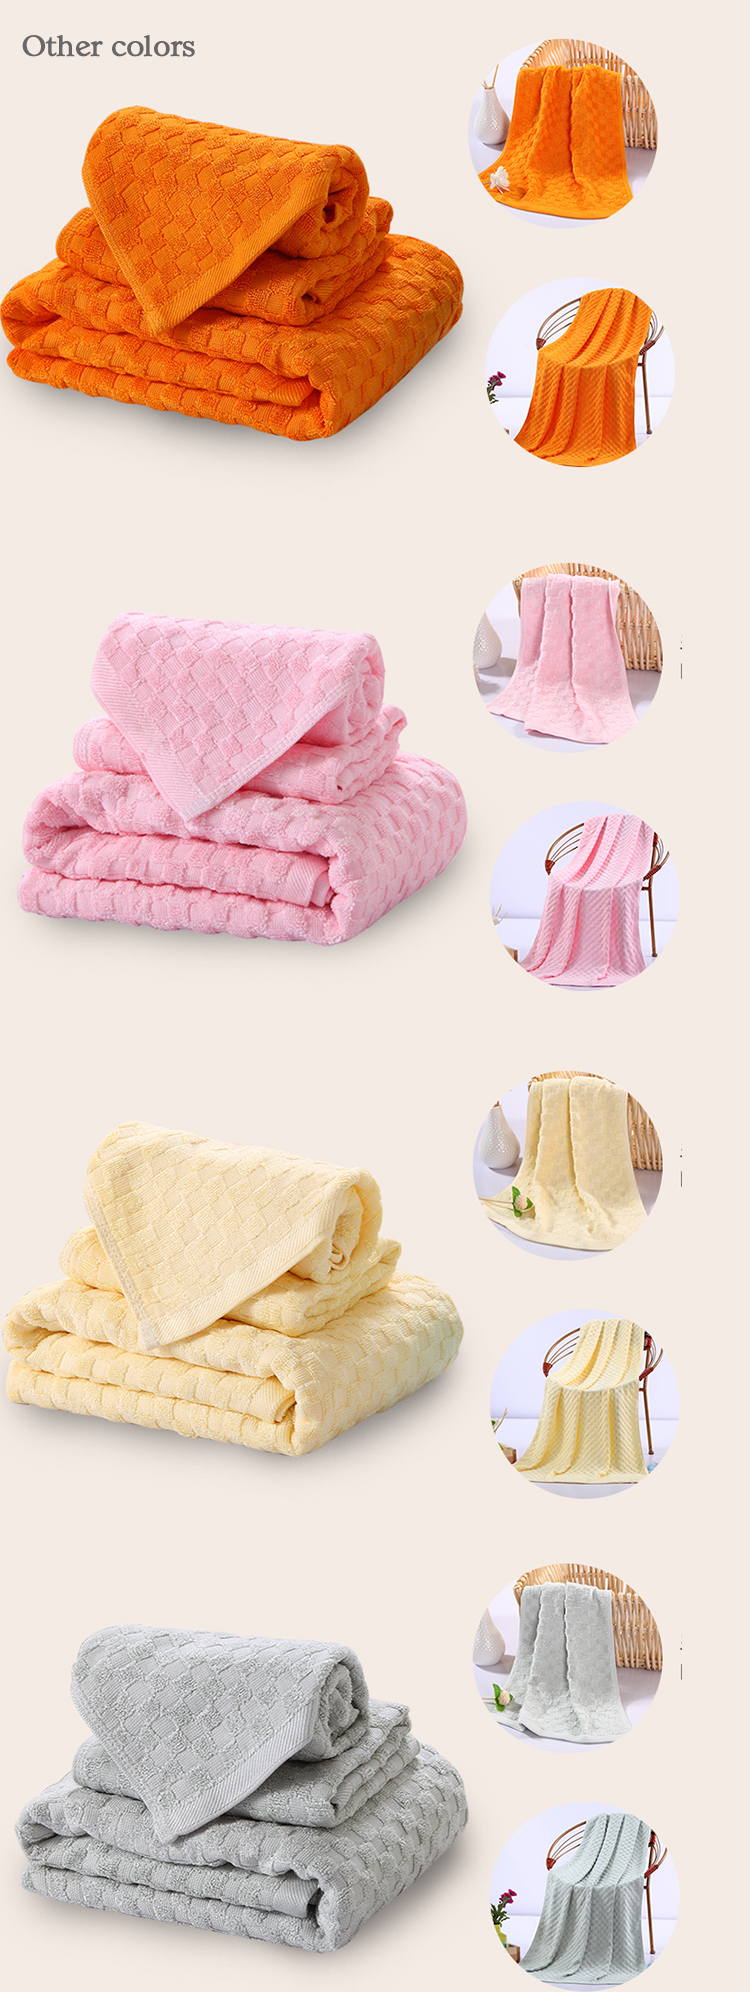 Terry Cloth Plain Gray Bath Towels